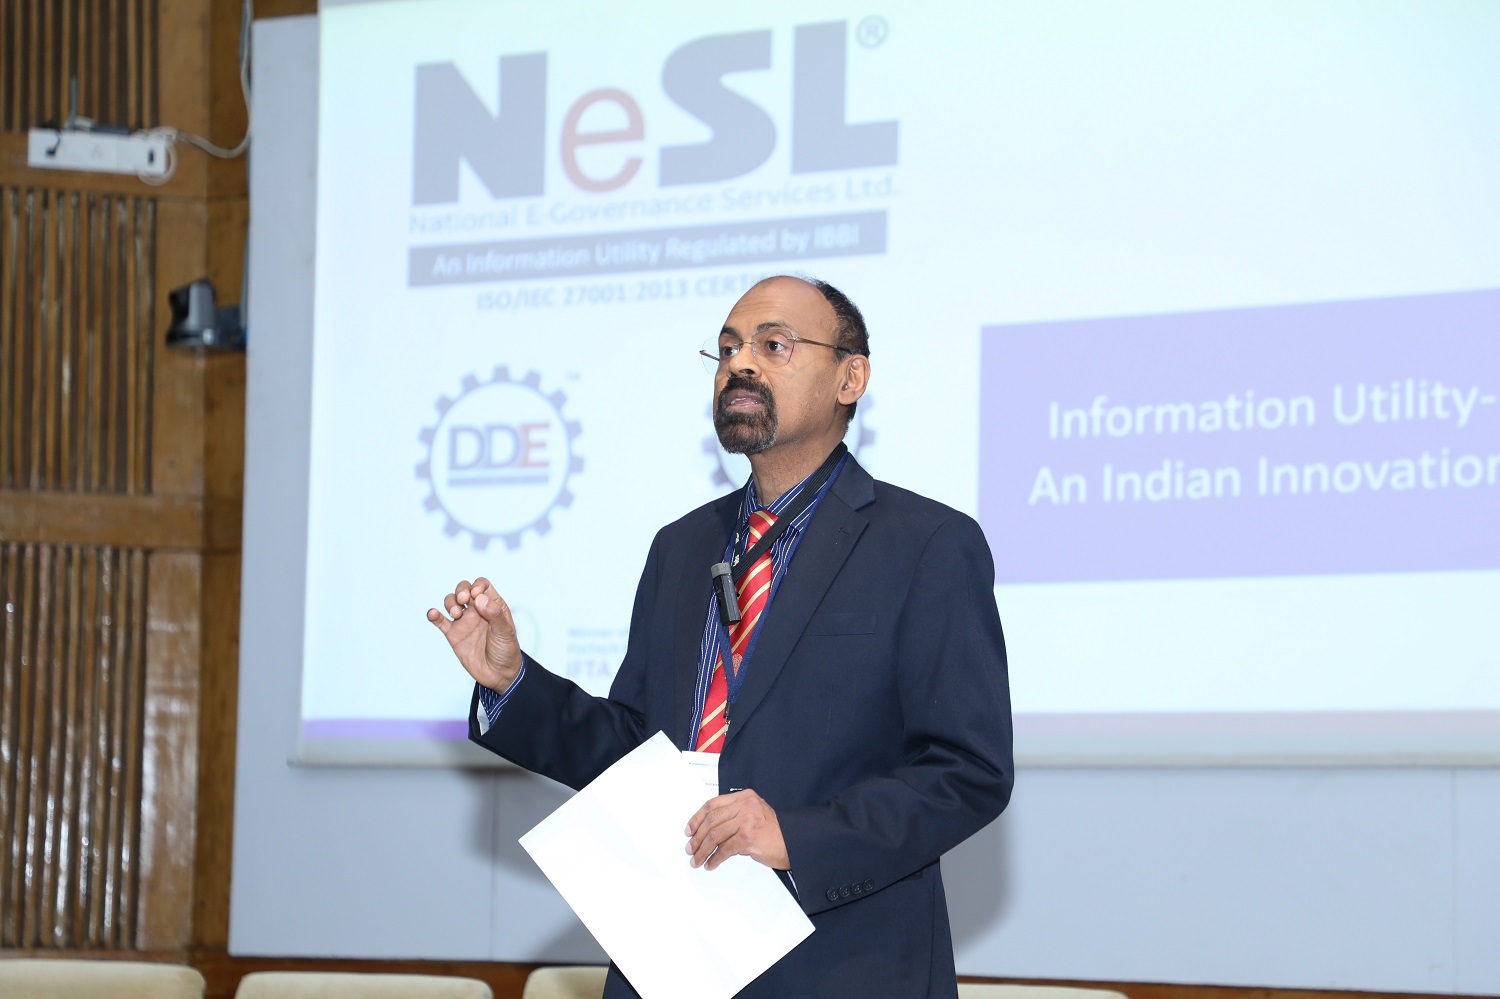 Debajyoti Ray Chaudhuri, MD & CEO, NeSL, speaks on “Information Utility – An Indian Innovation”.